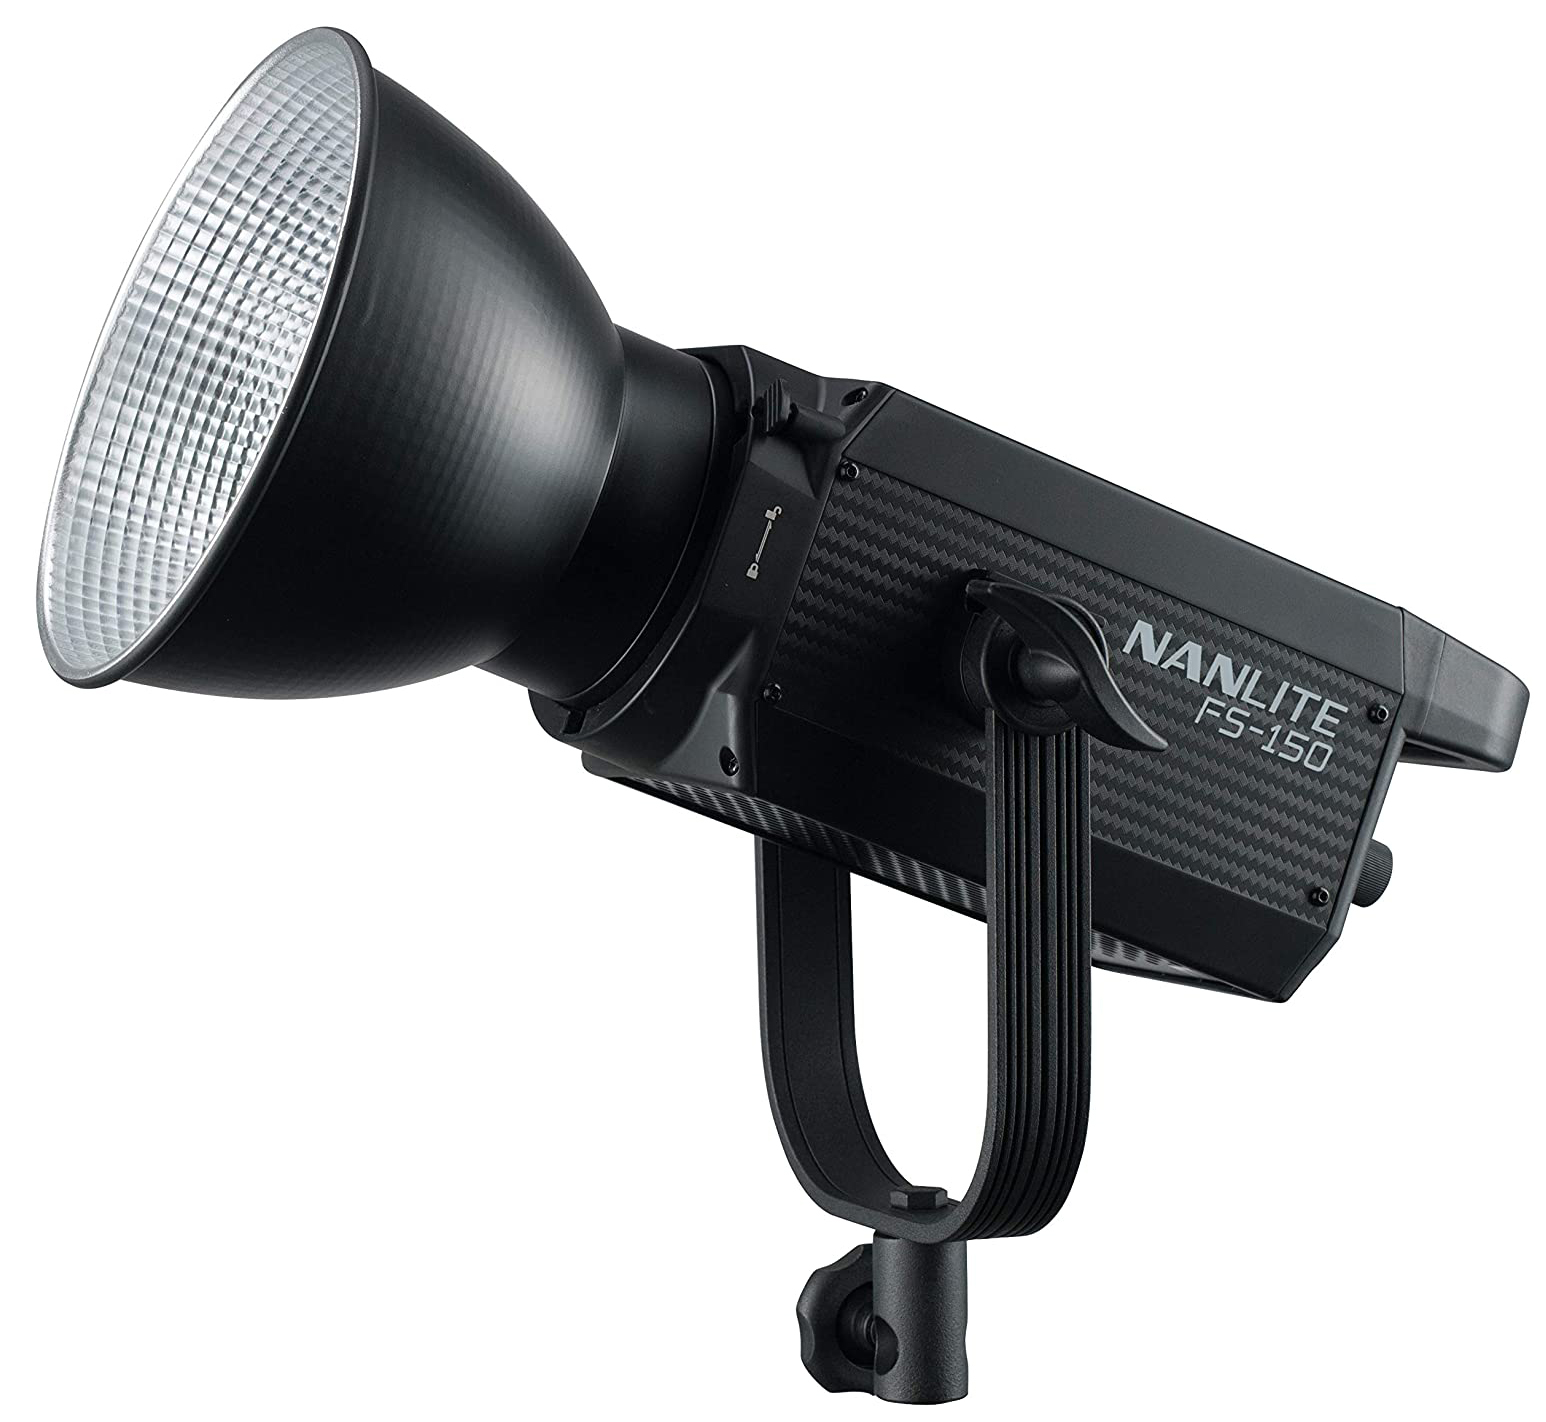 NANLITE FS-150 DAYLIGHT LED SPOTLIGHT